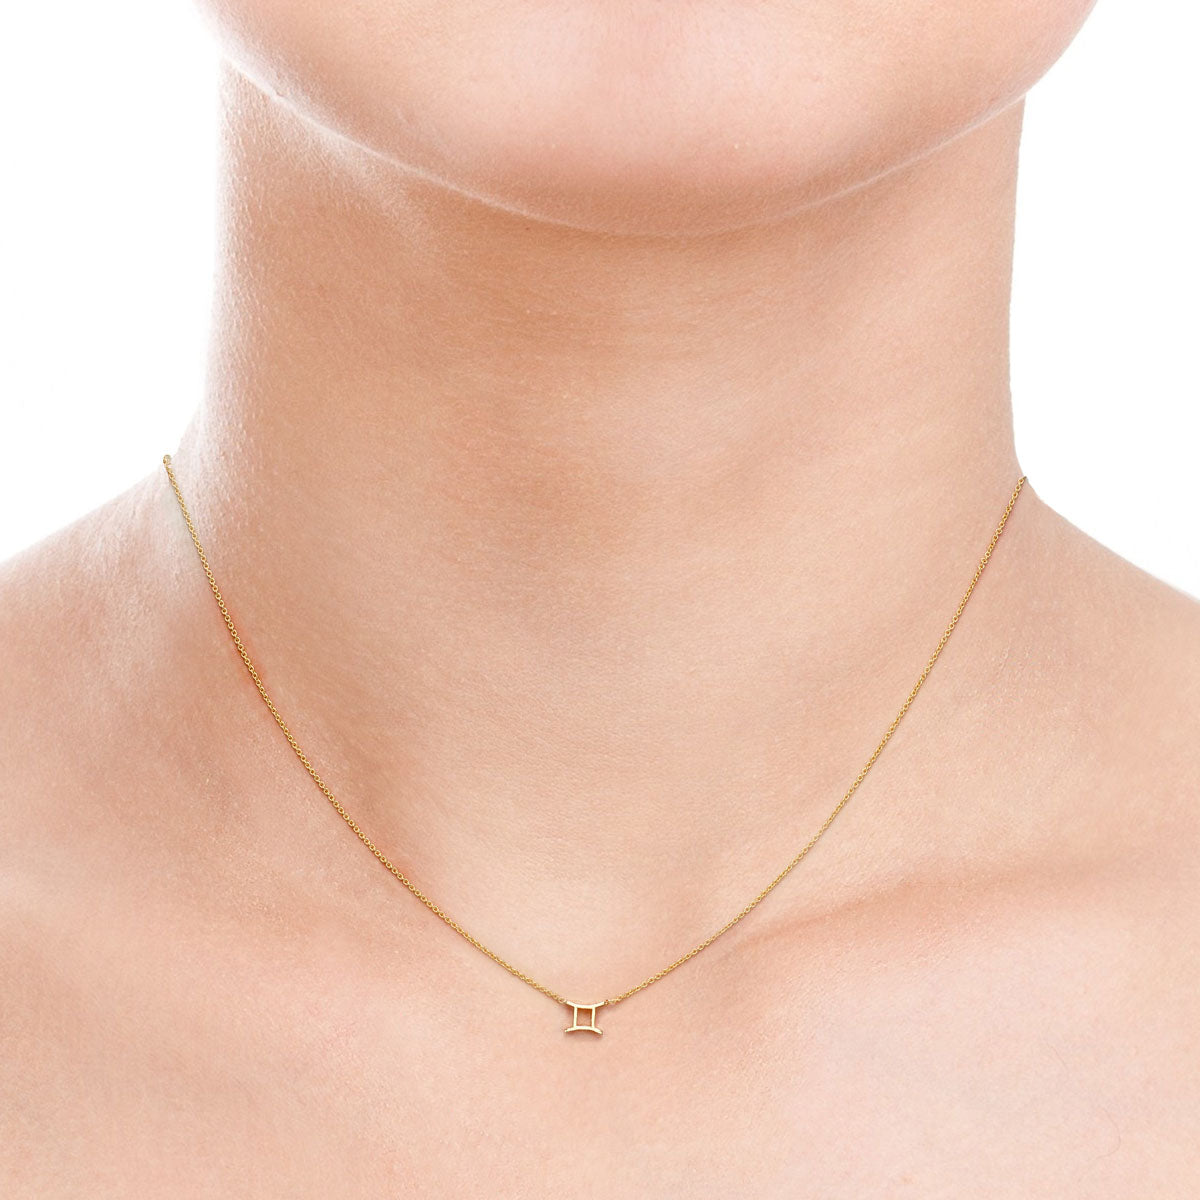 gemini gold zodiac necklace on womans neck